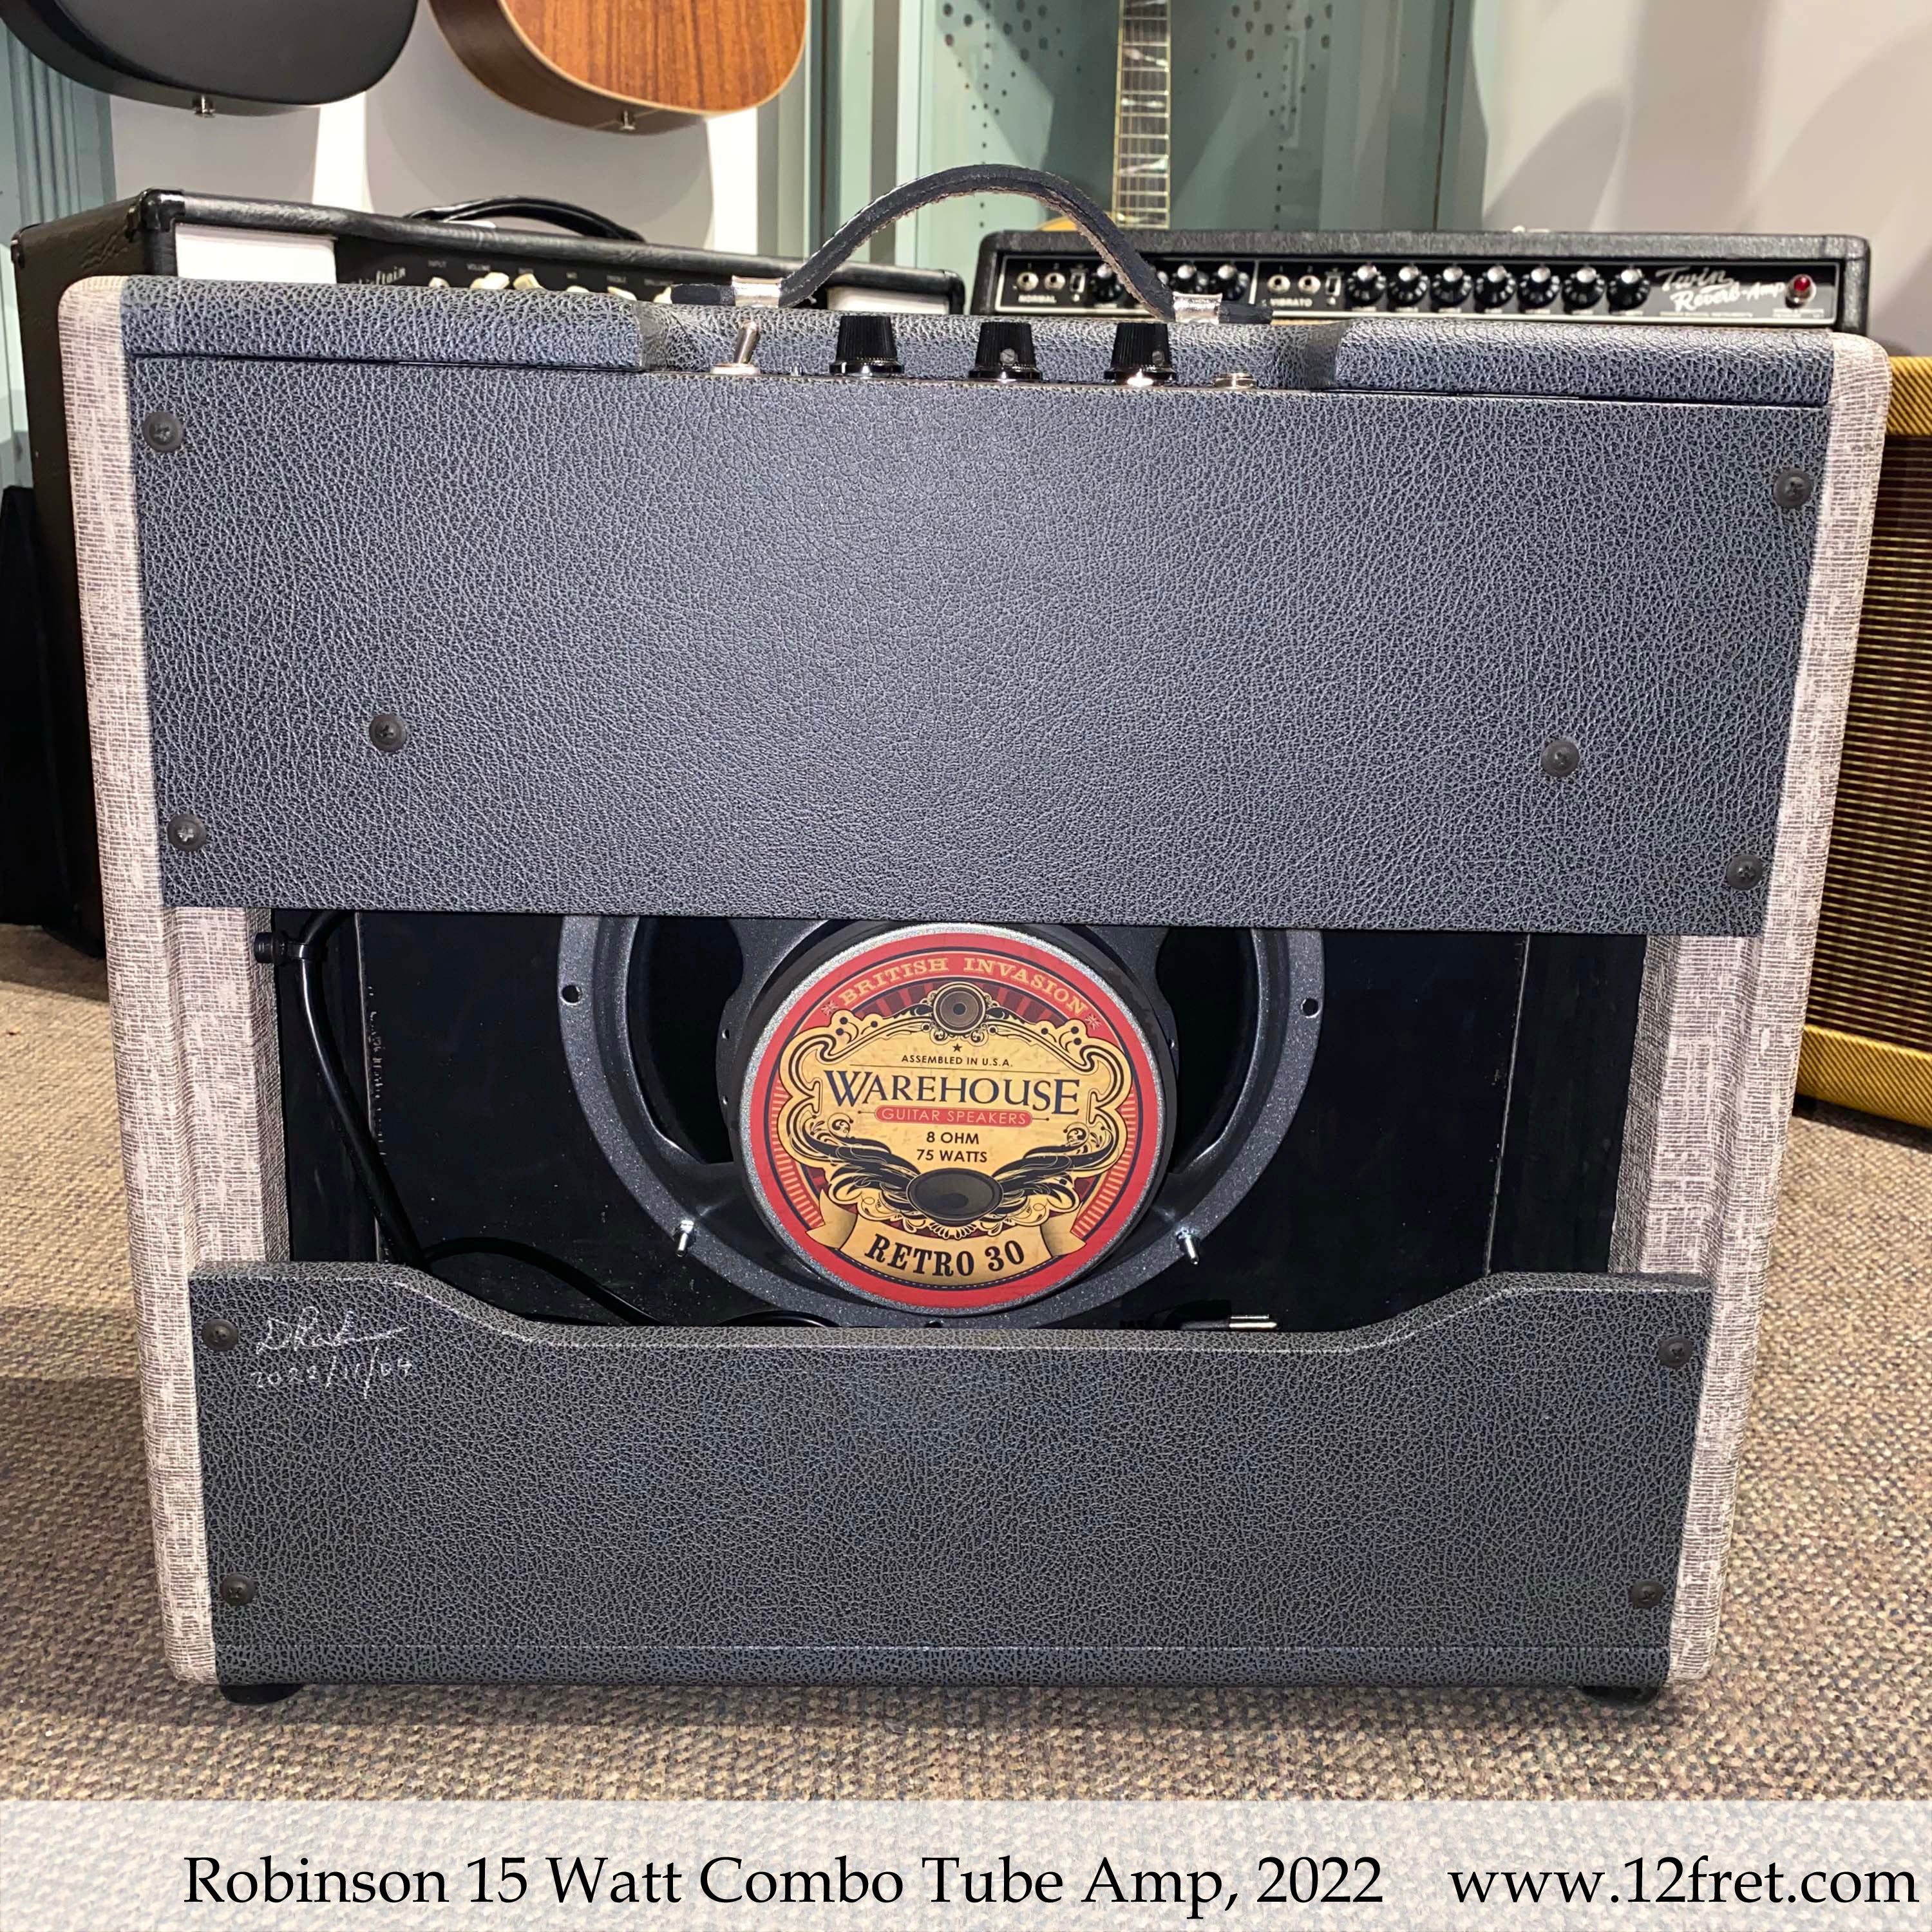 Robinson 15 Watt Combo Tube Amp, 2022 - The Twelfth Fret